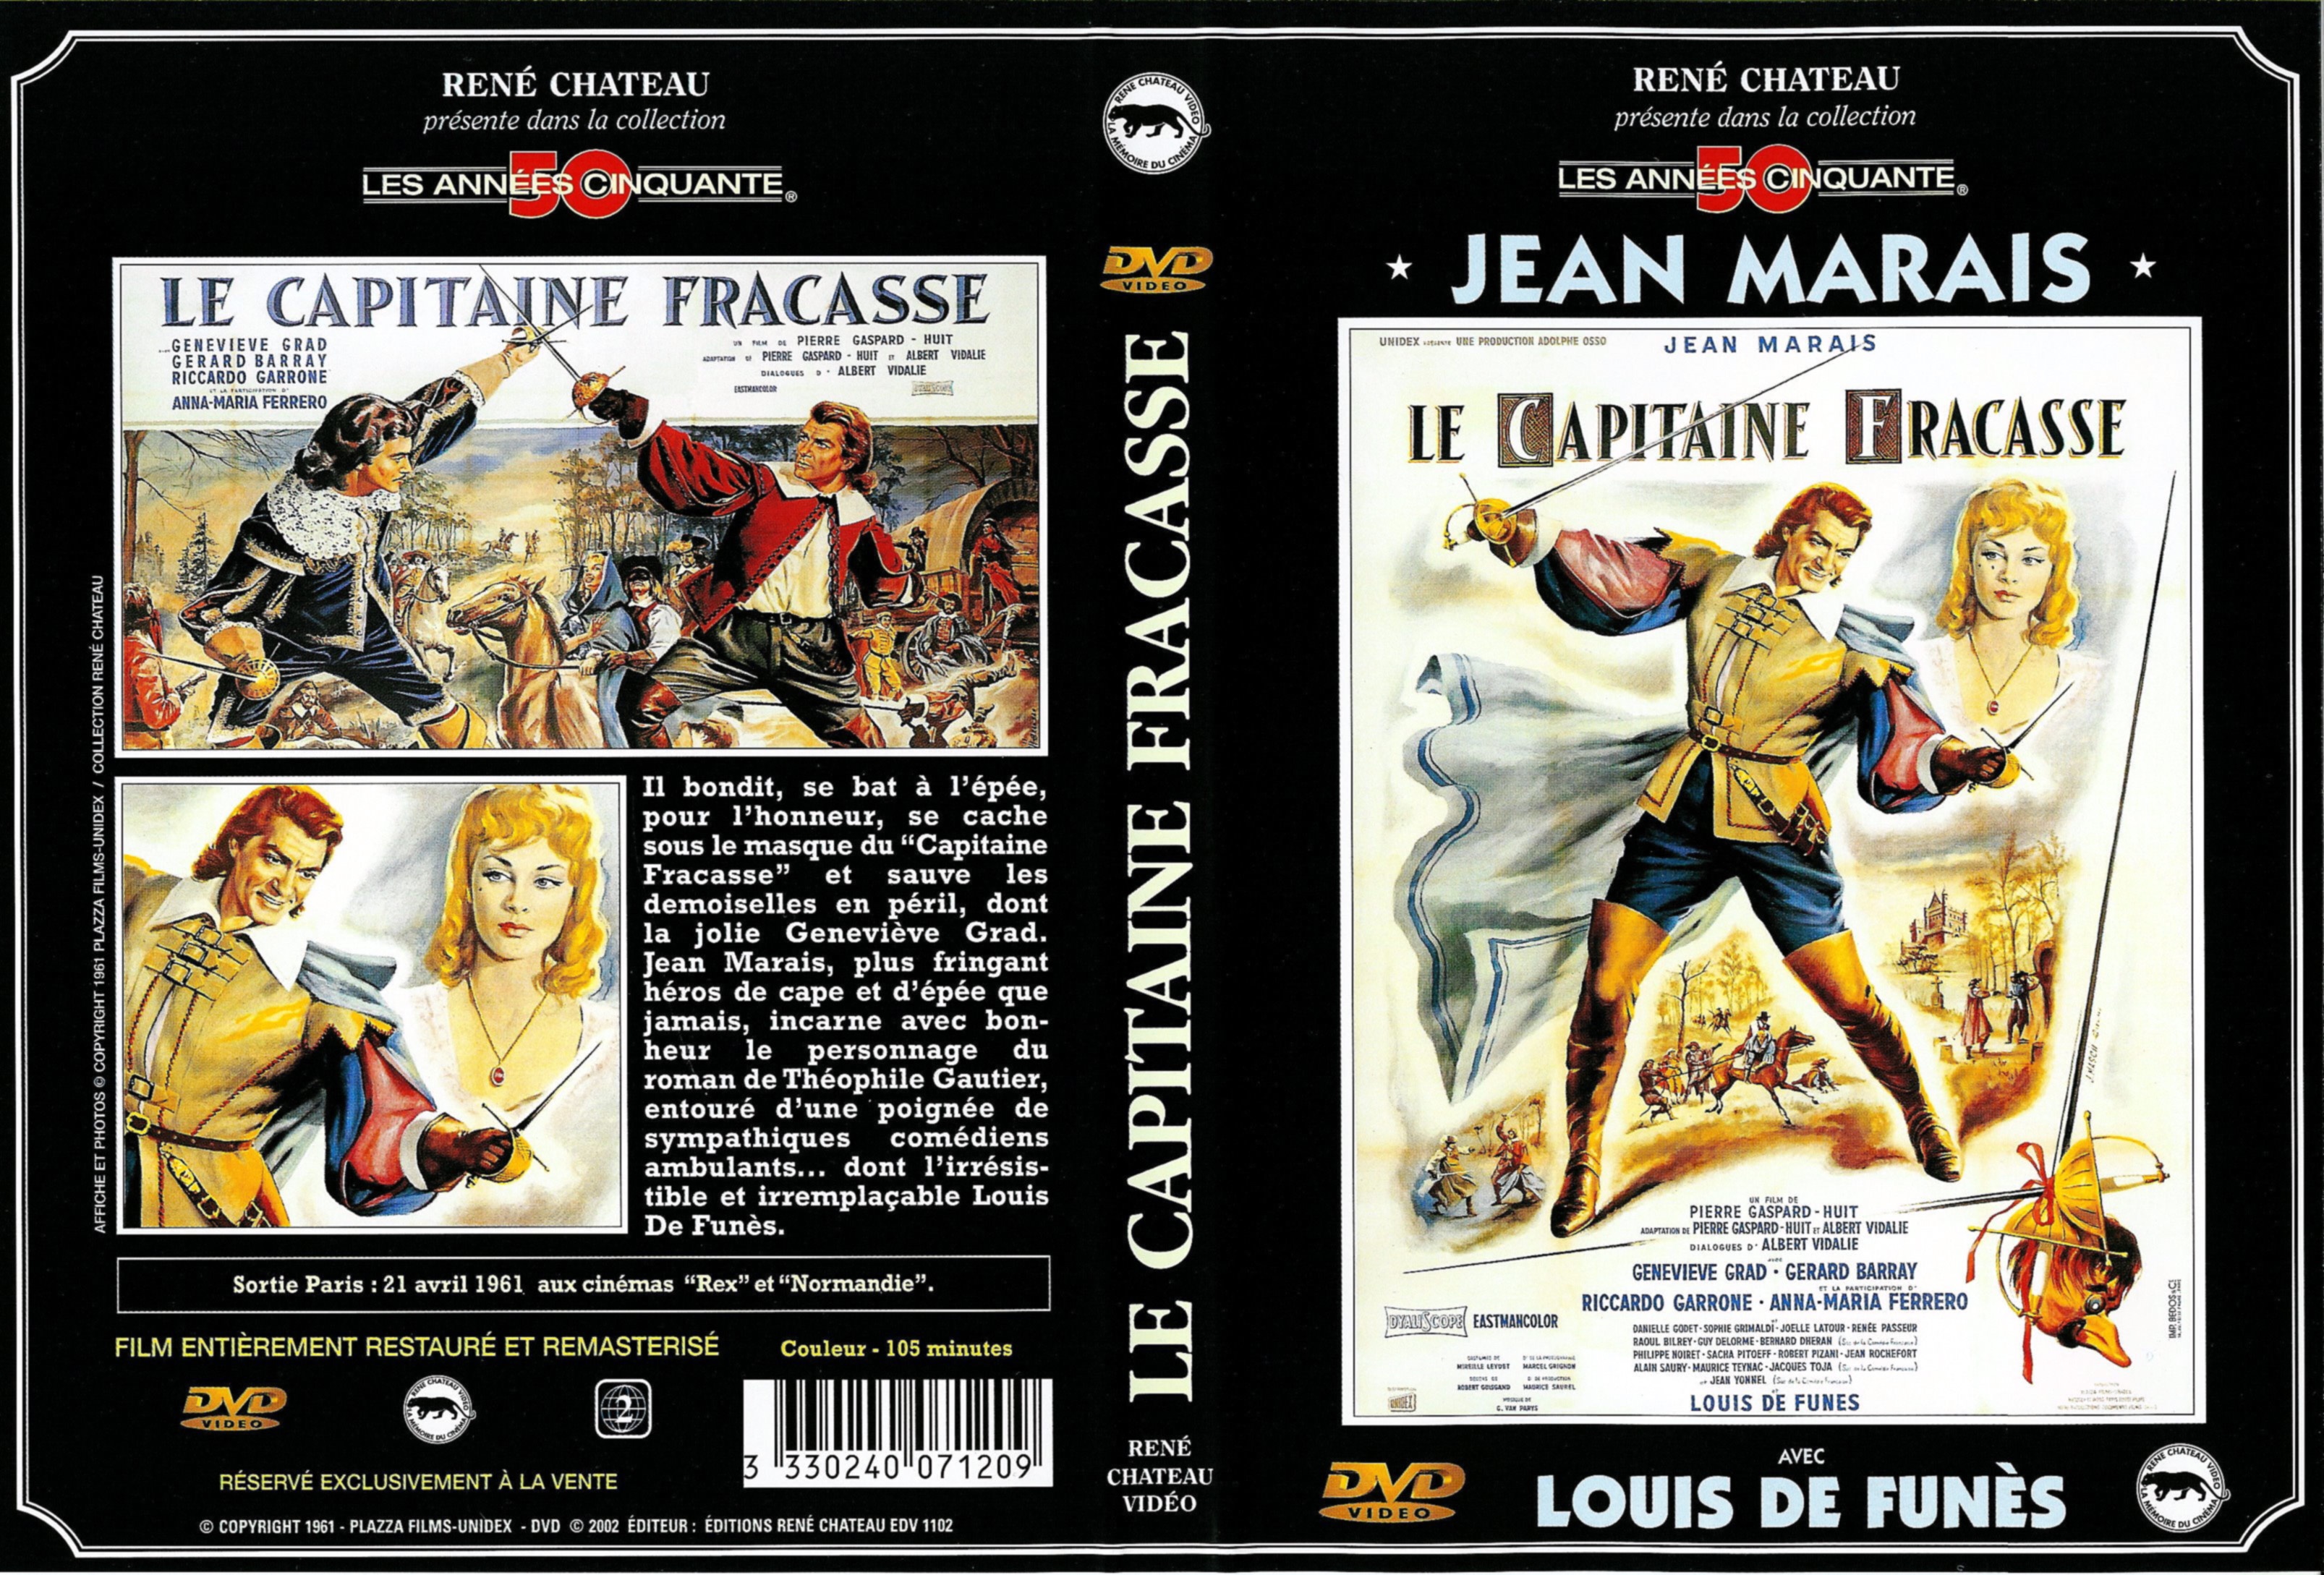 Jaquette DVD Le Capitaine Fracasse v2